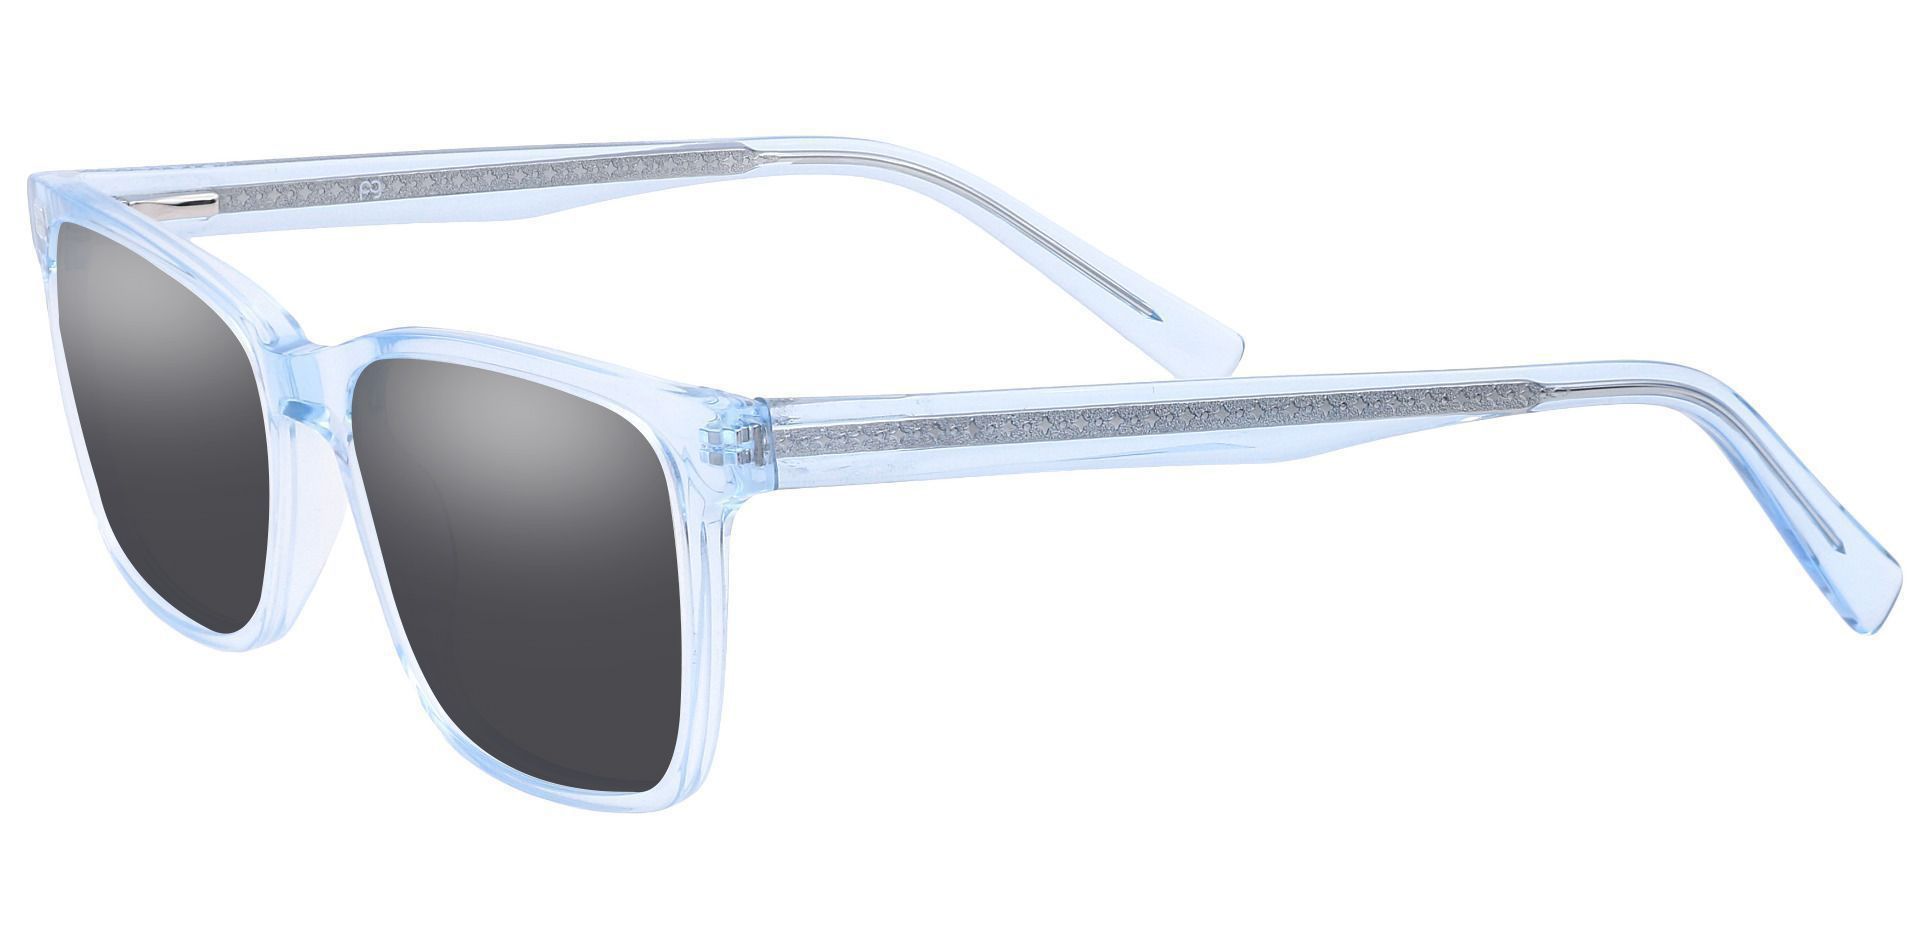 Galaxy Rectangle Prescription Sunglasses - Blue Frame With Gray Lenses